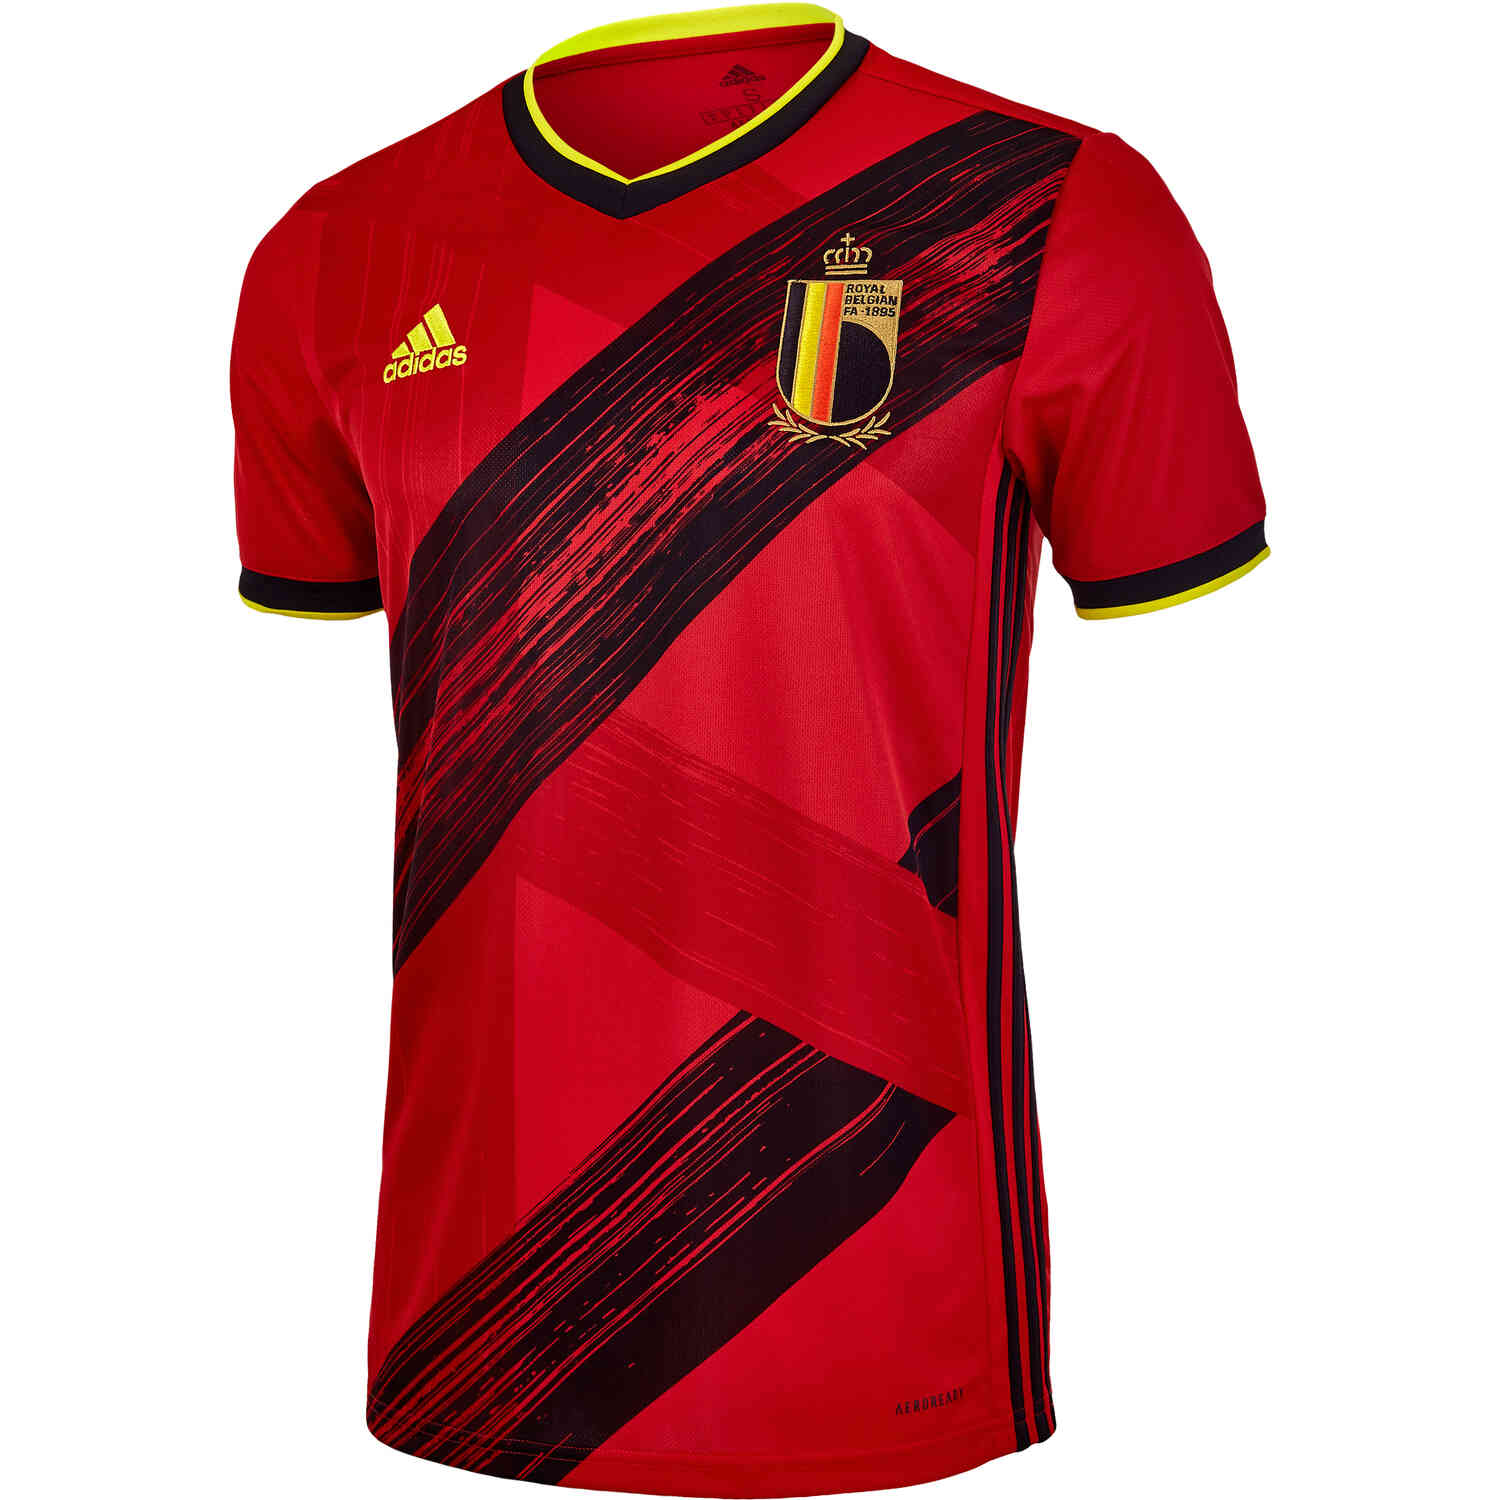 belgium national team jersey